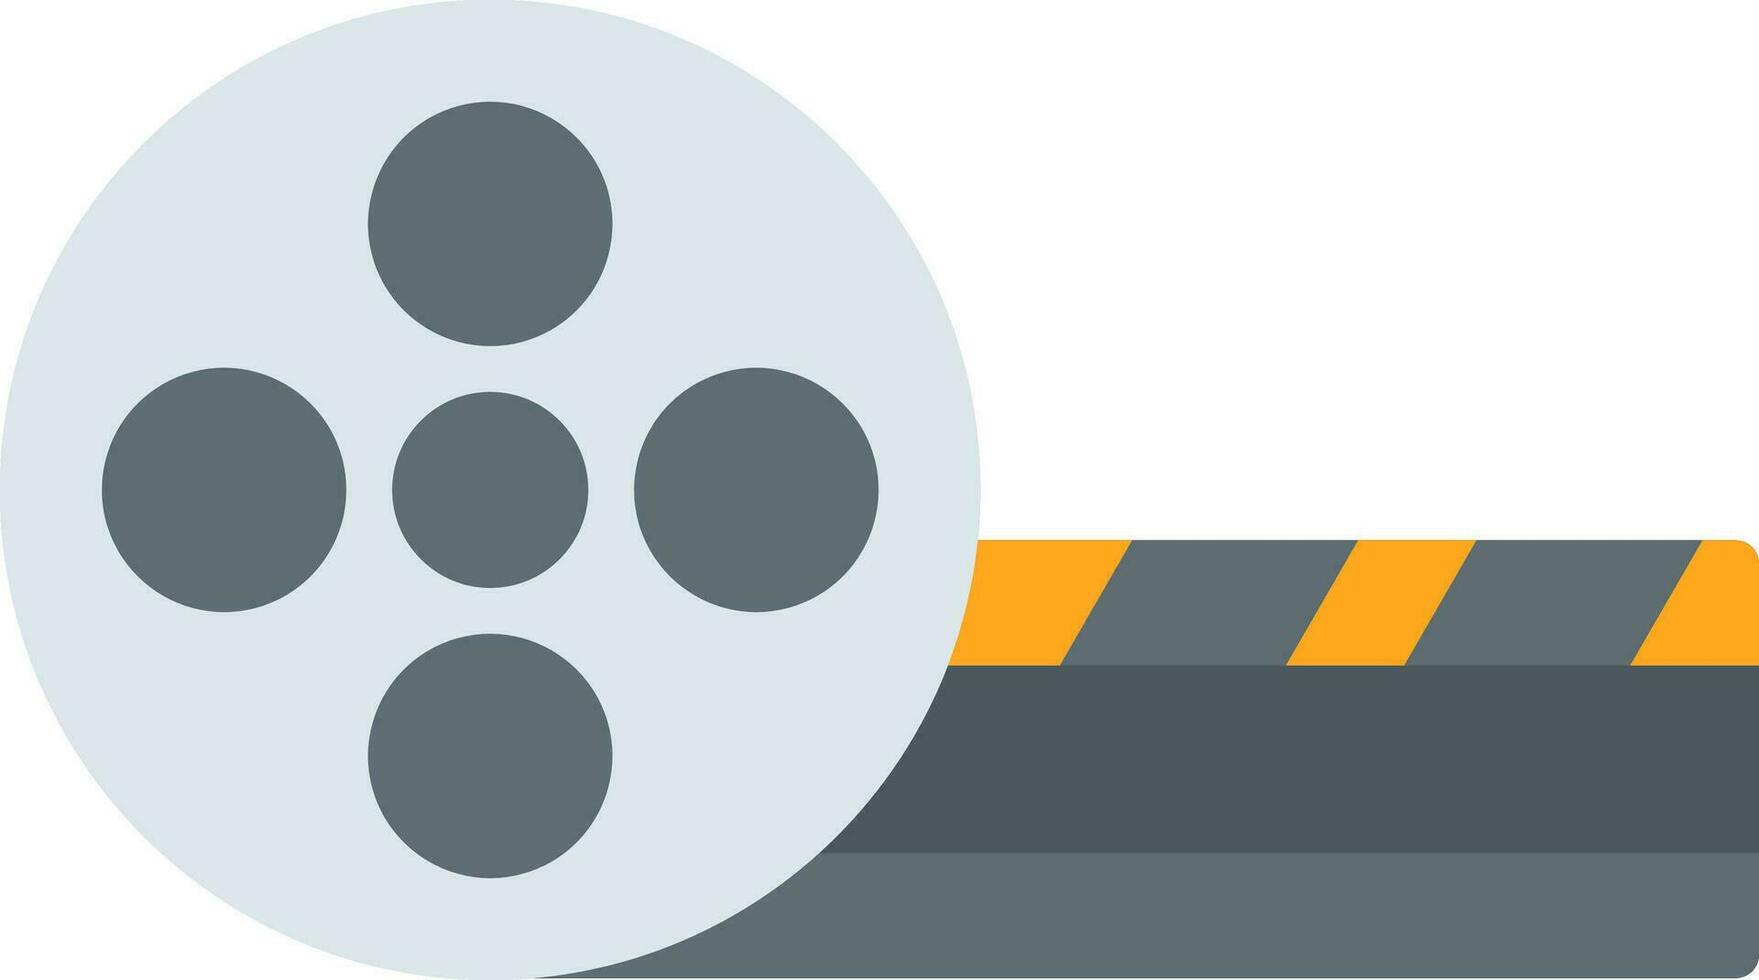 film bobina vettore icona design